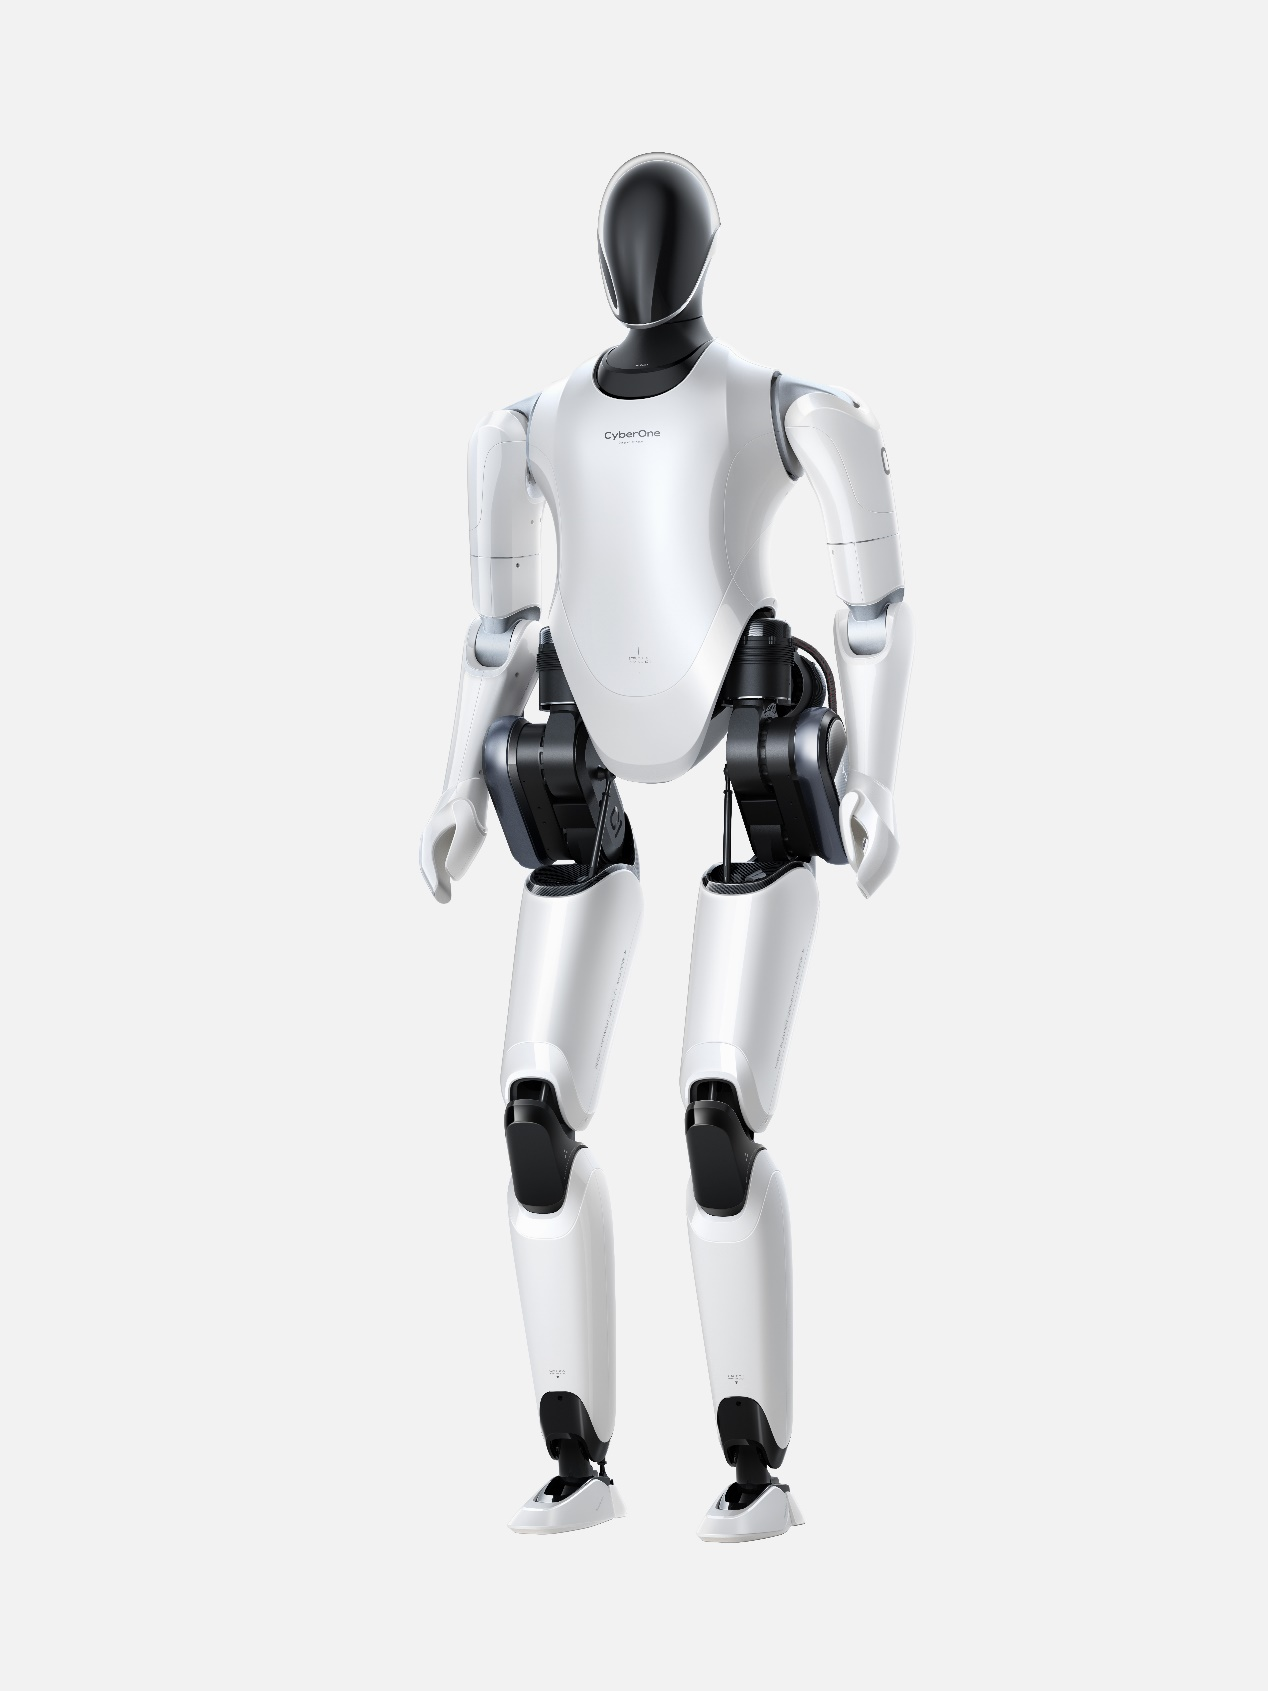 CyberOne Full-size Humanoid Robot